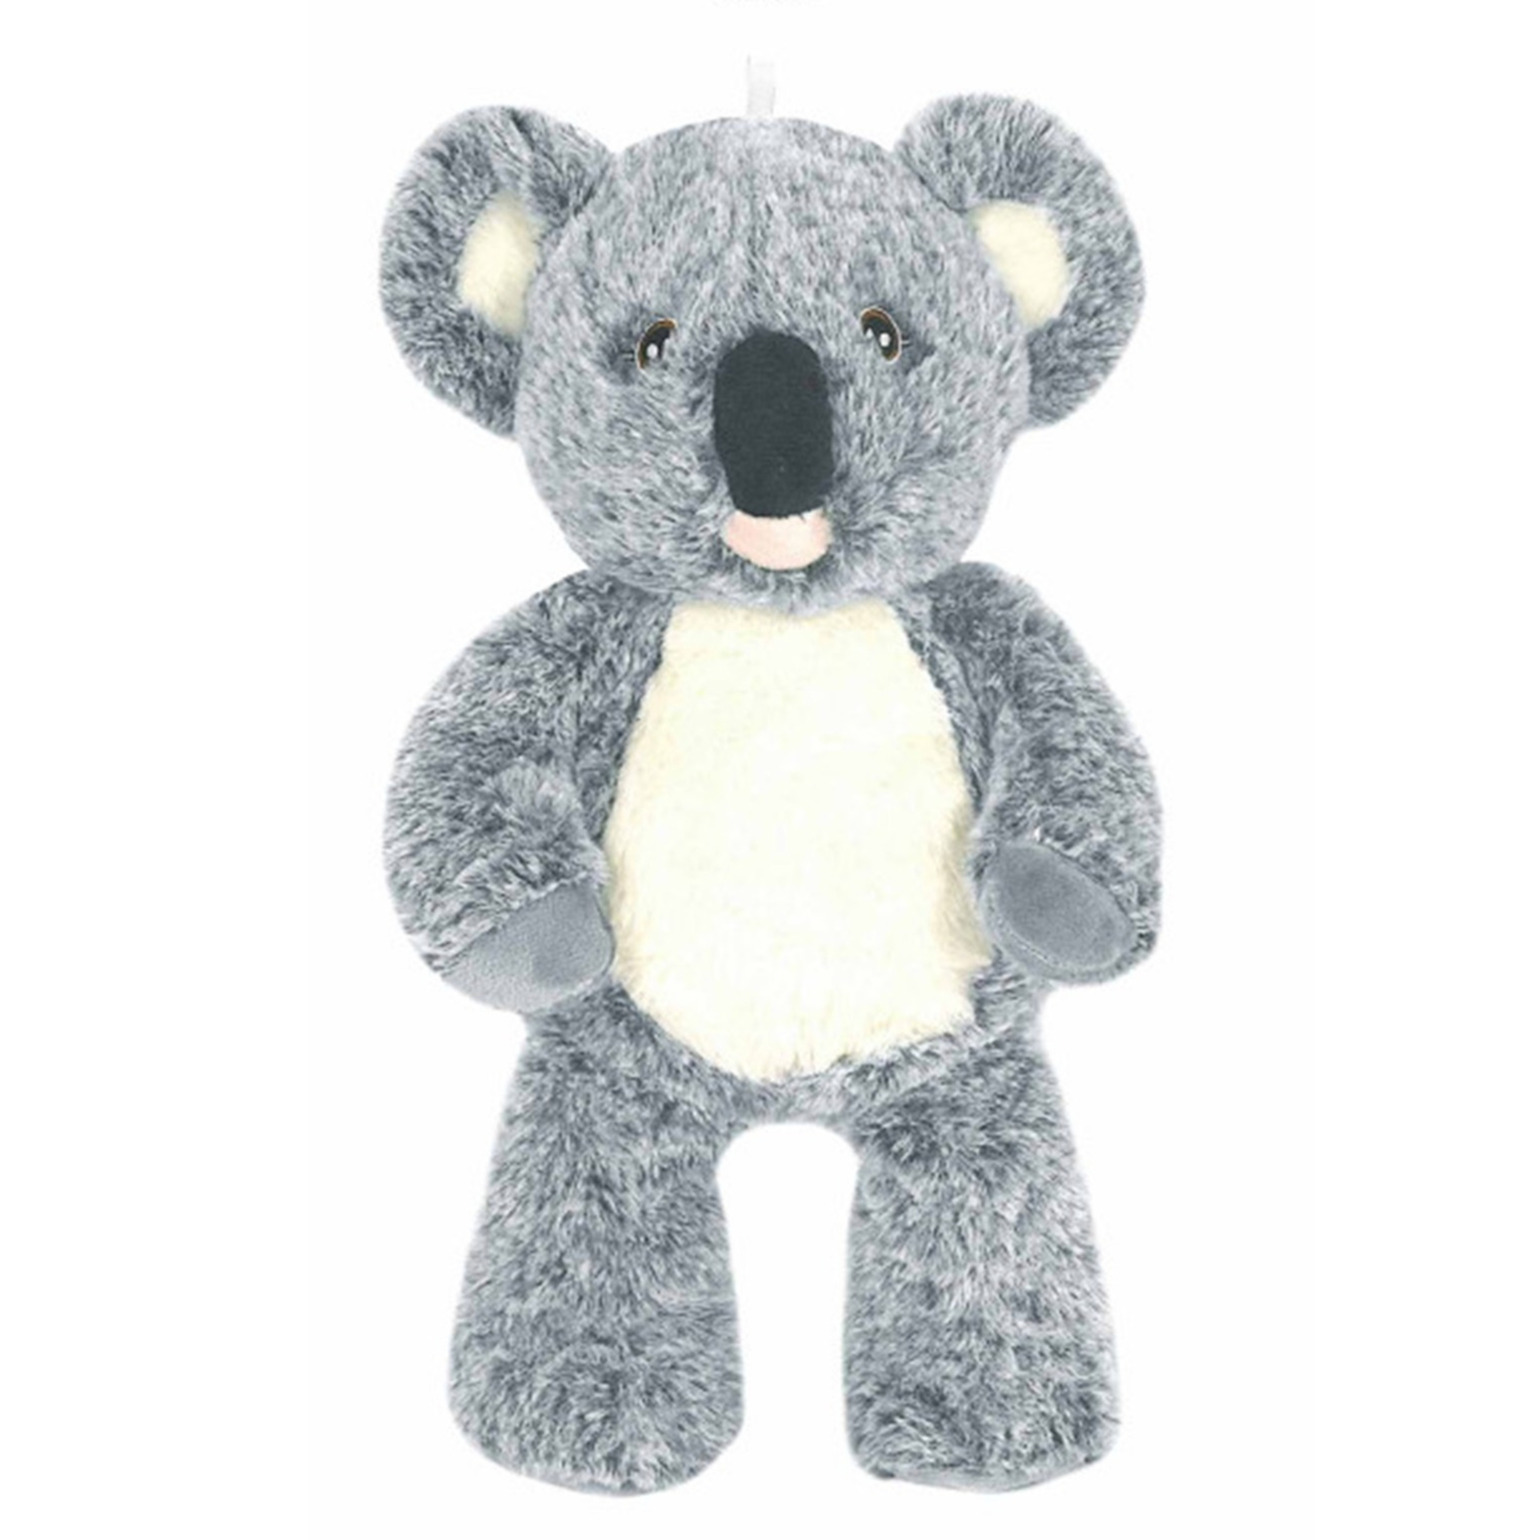 Sandy Knuffeldier Koala Aussie - zachte pluche stof - dieren knuffels - grijs - 25 cm -